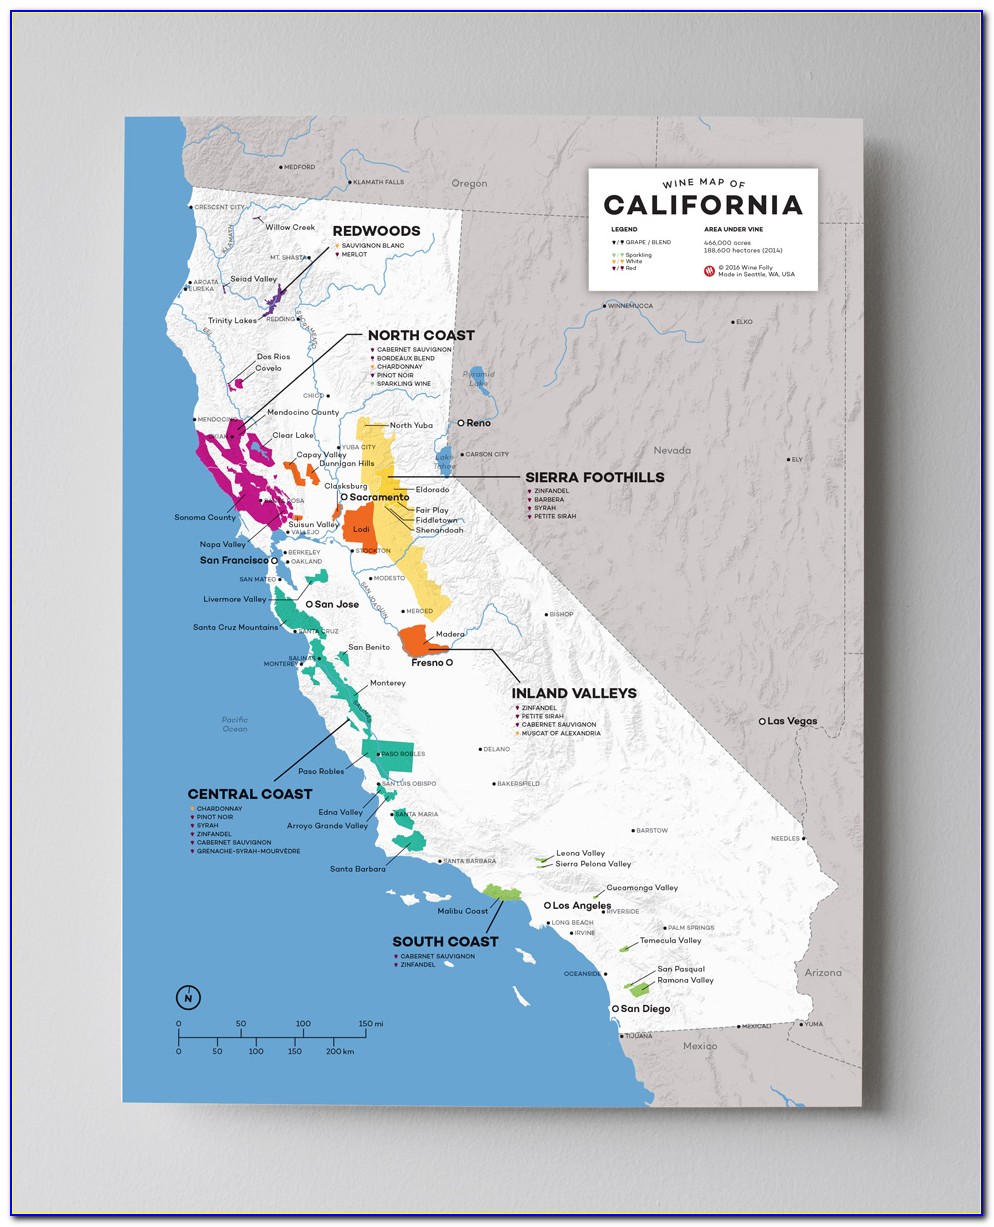 Lodi California Winery Map